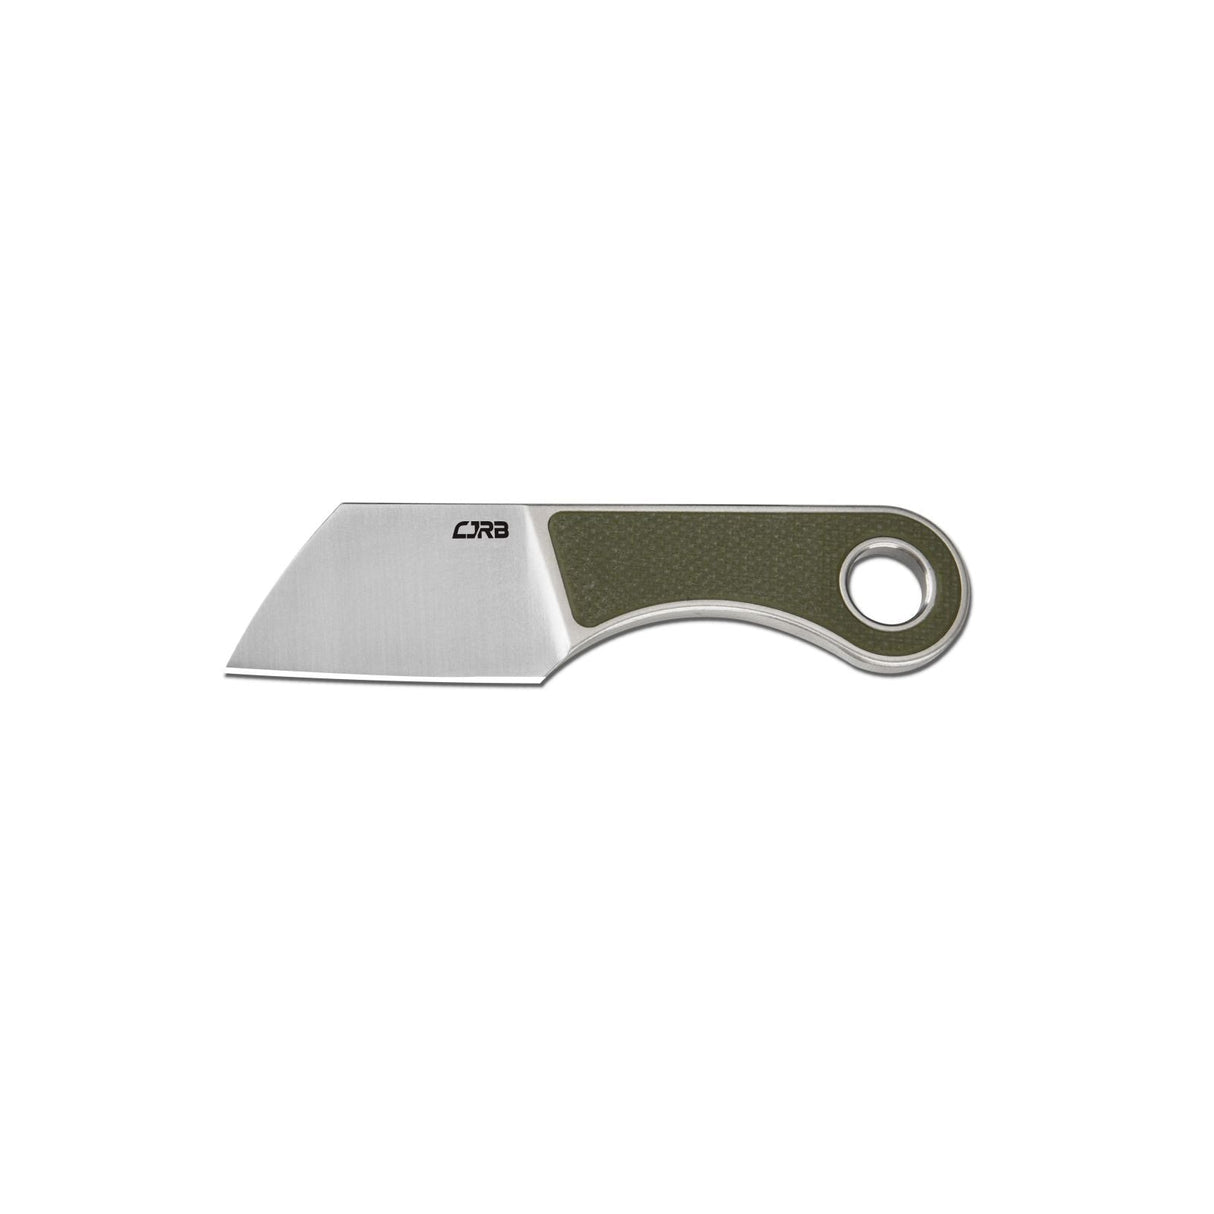 CJRB Chip J1939 AR-RPM9 Powder Steel Blade G10/Carbon fiber Handle Fixed Blade Knives